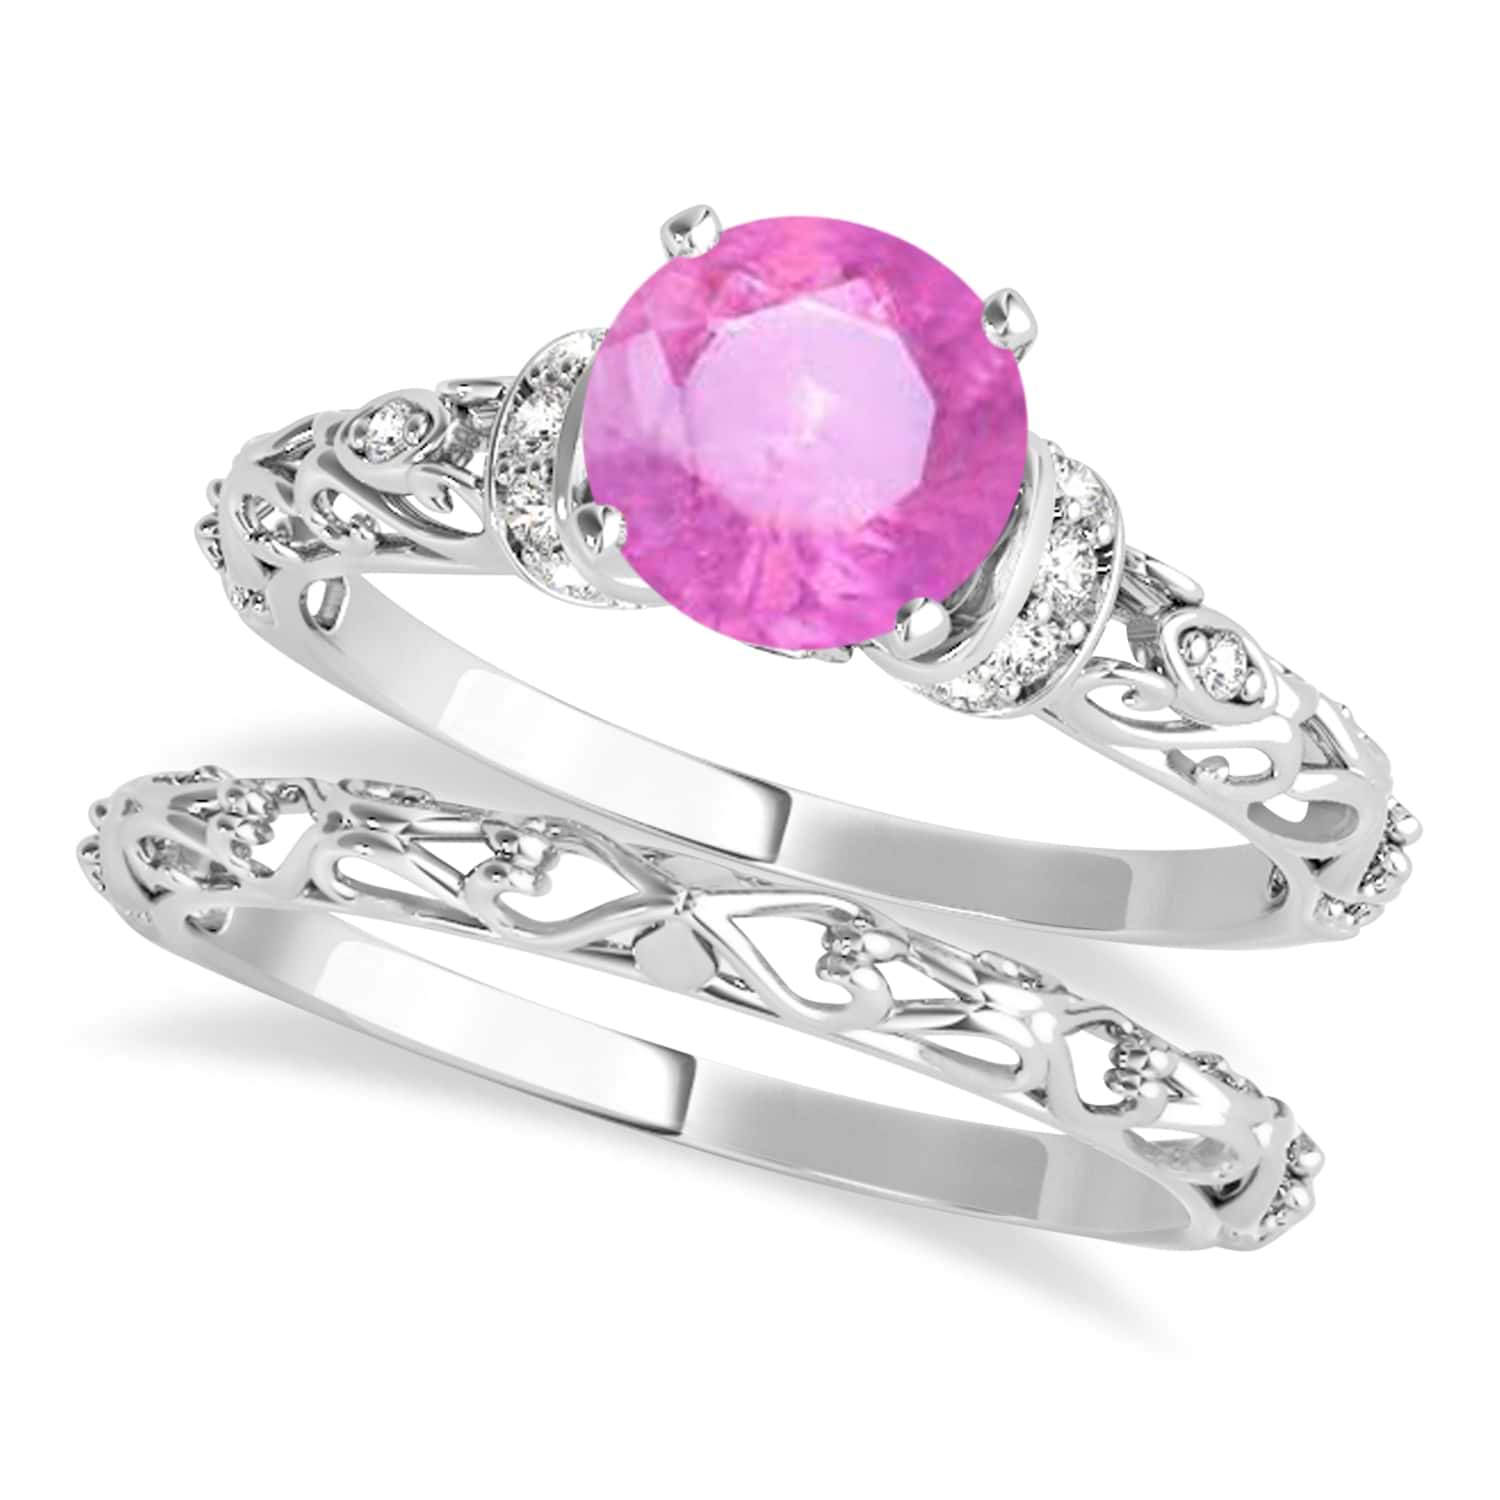 Pink Sapphire & Diamond Antique Style Bridal Set 18k White Gold (0.87ct)